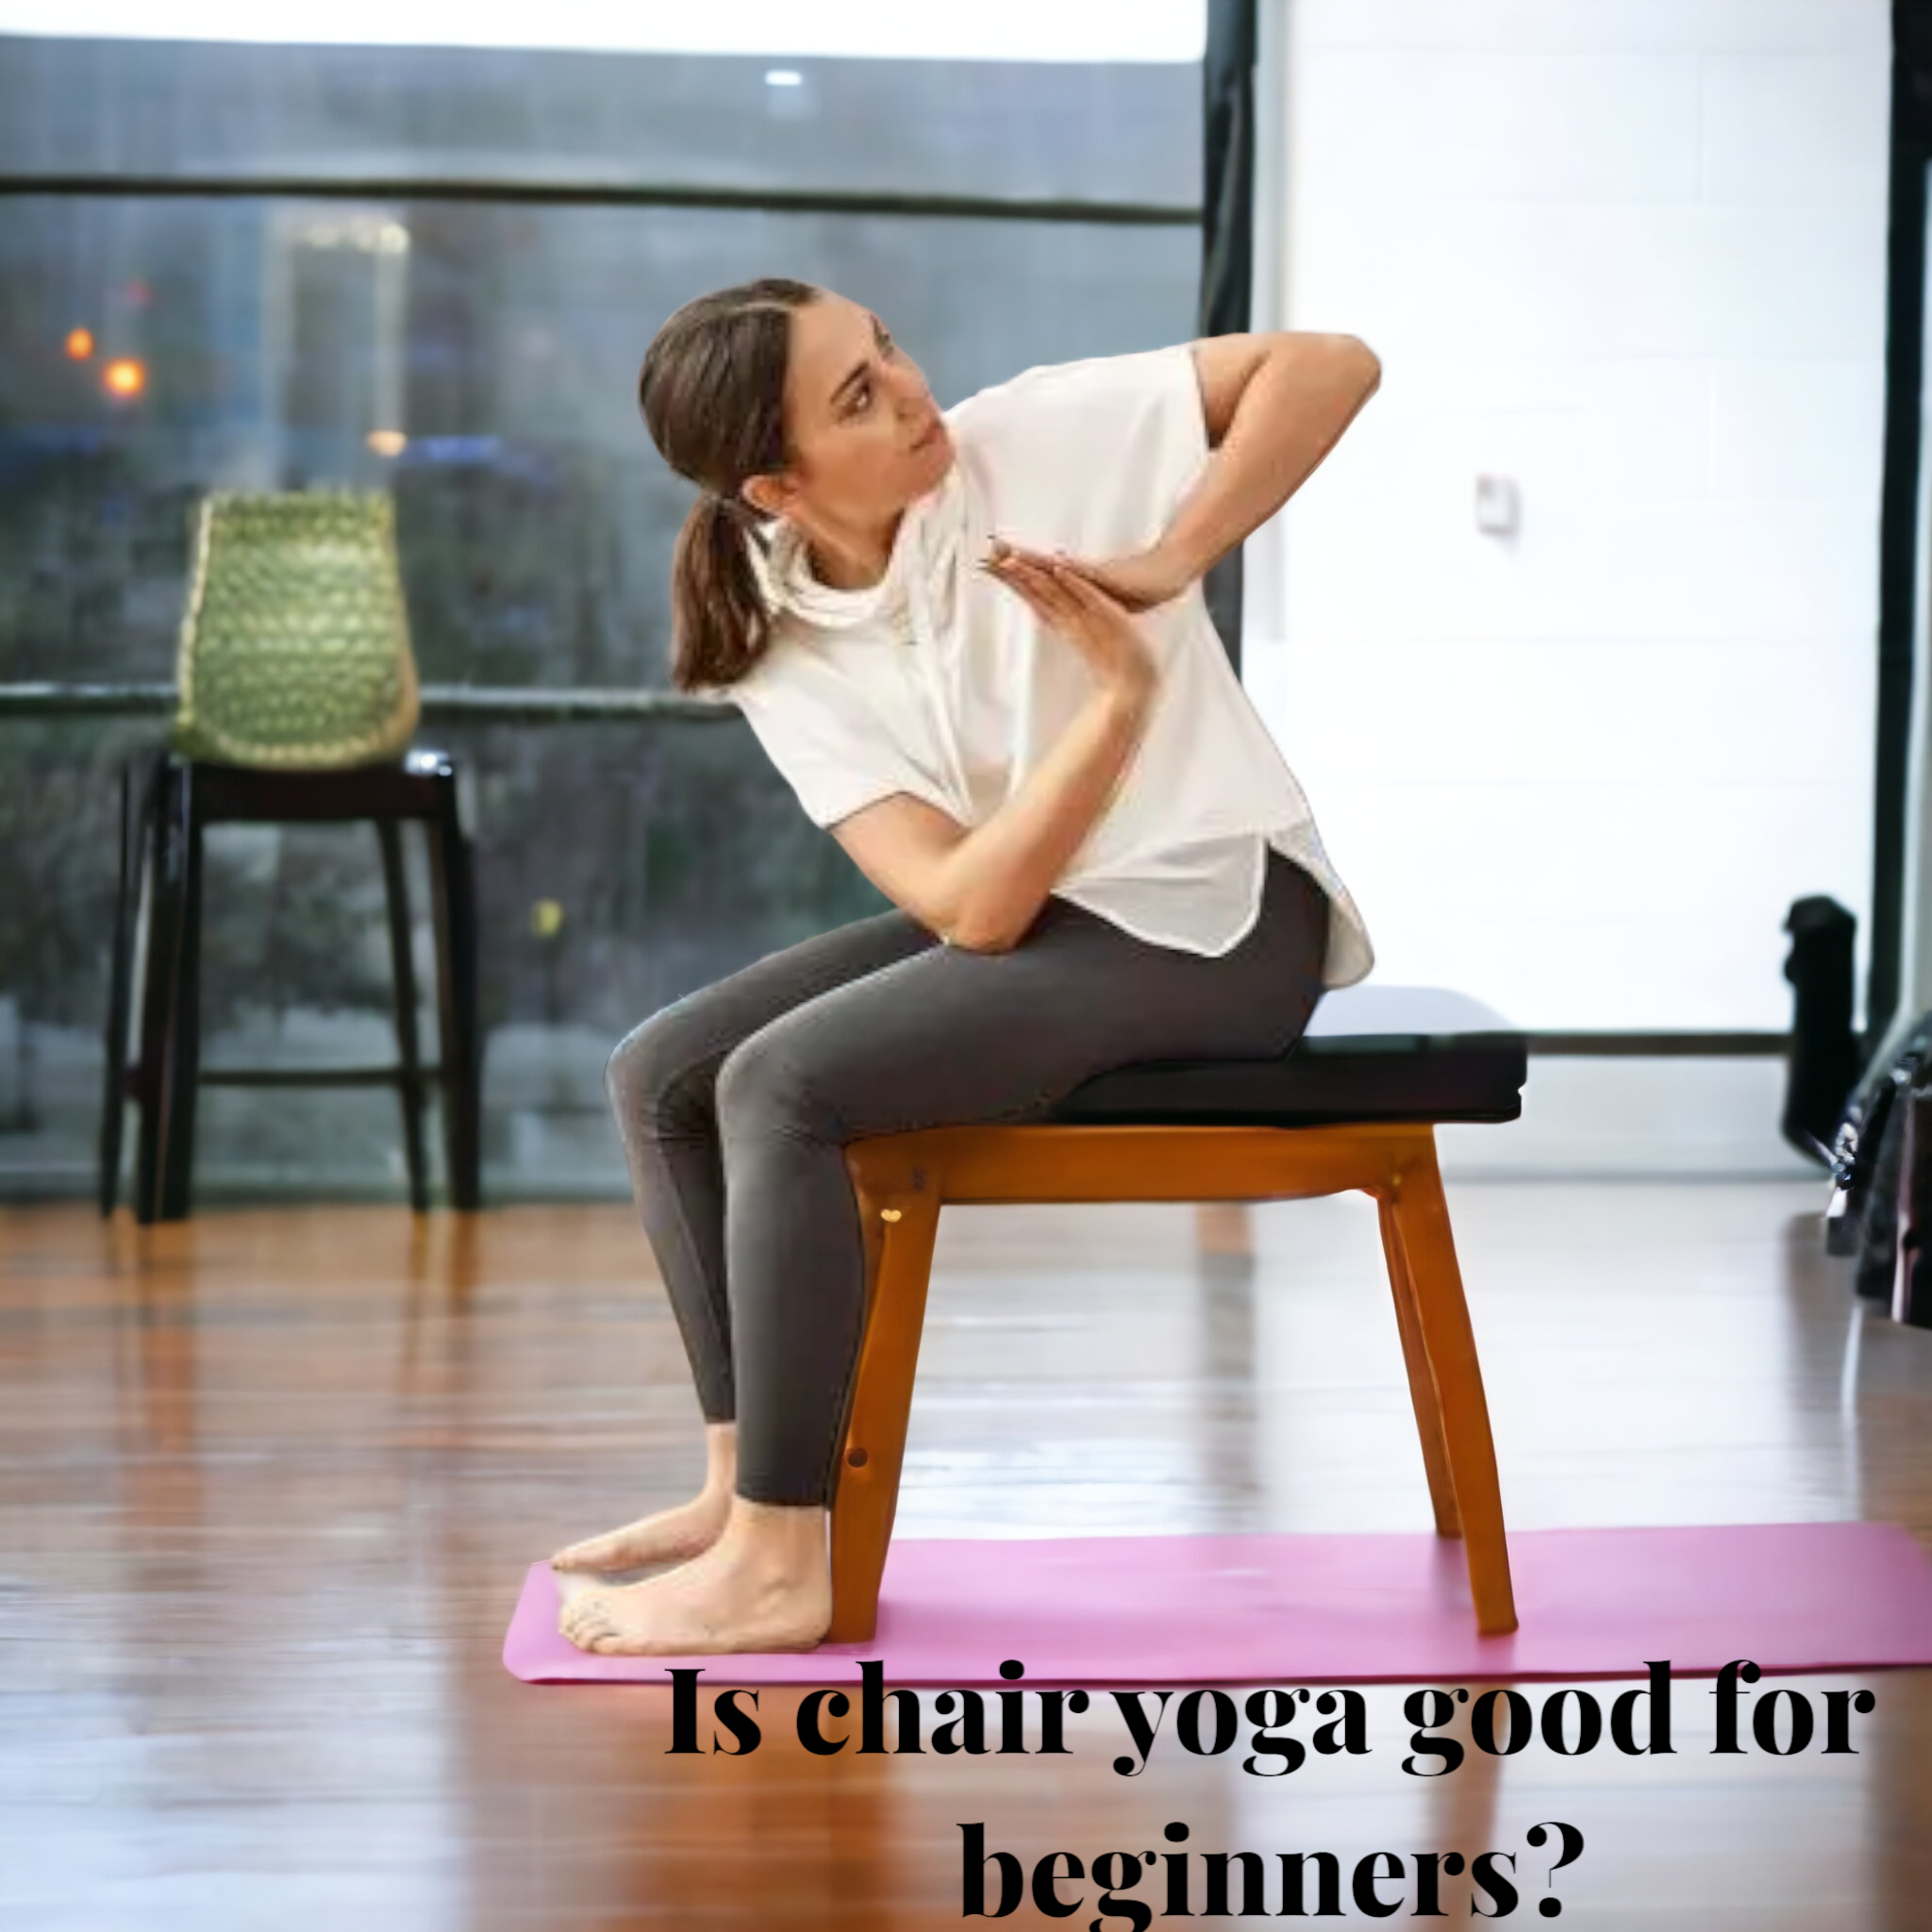 Chair yoga